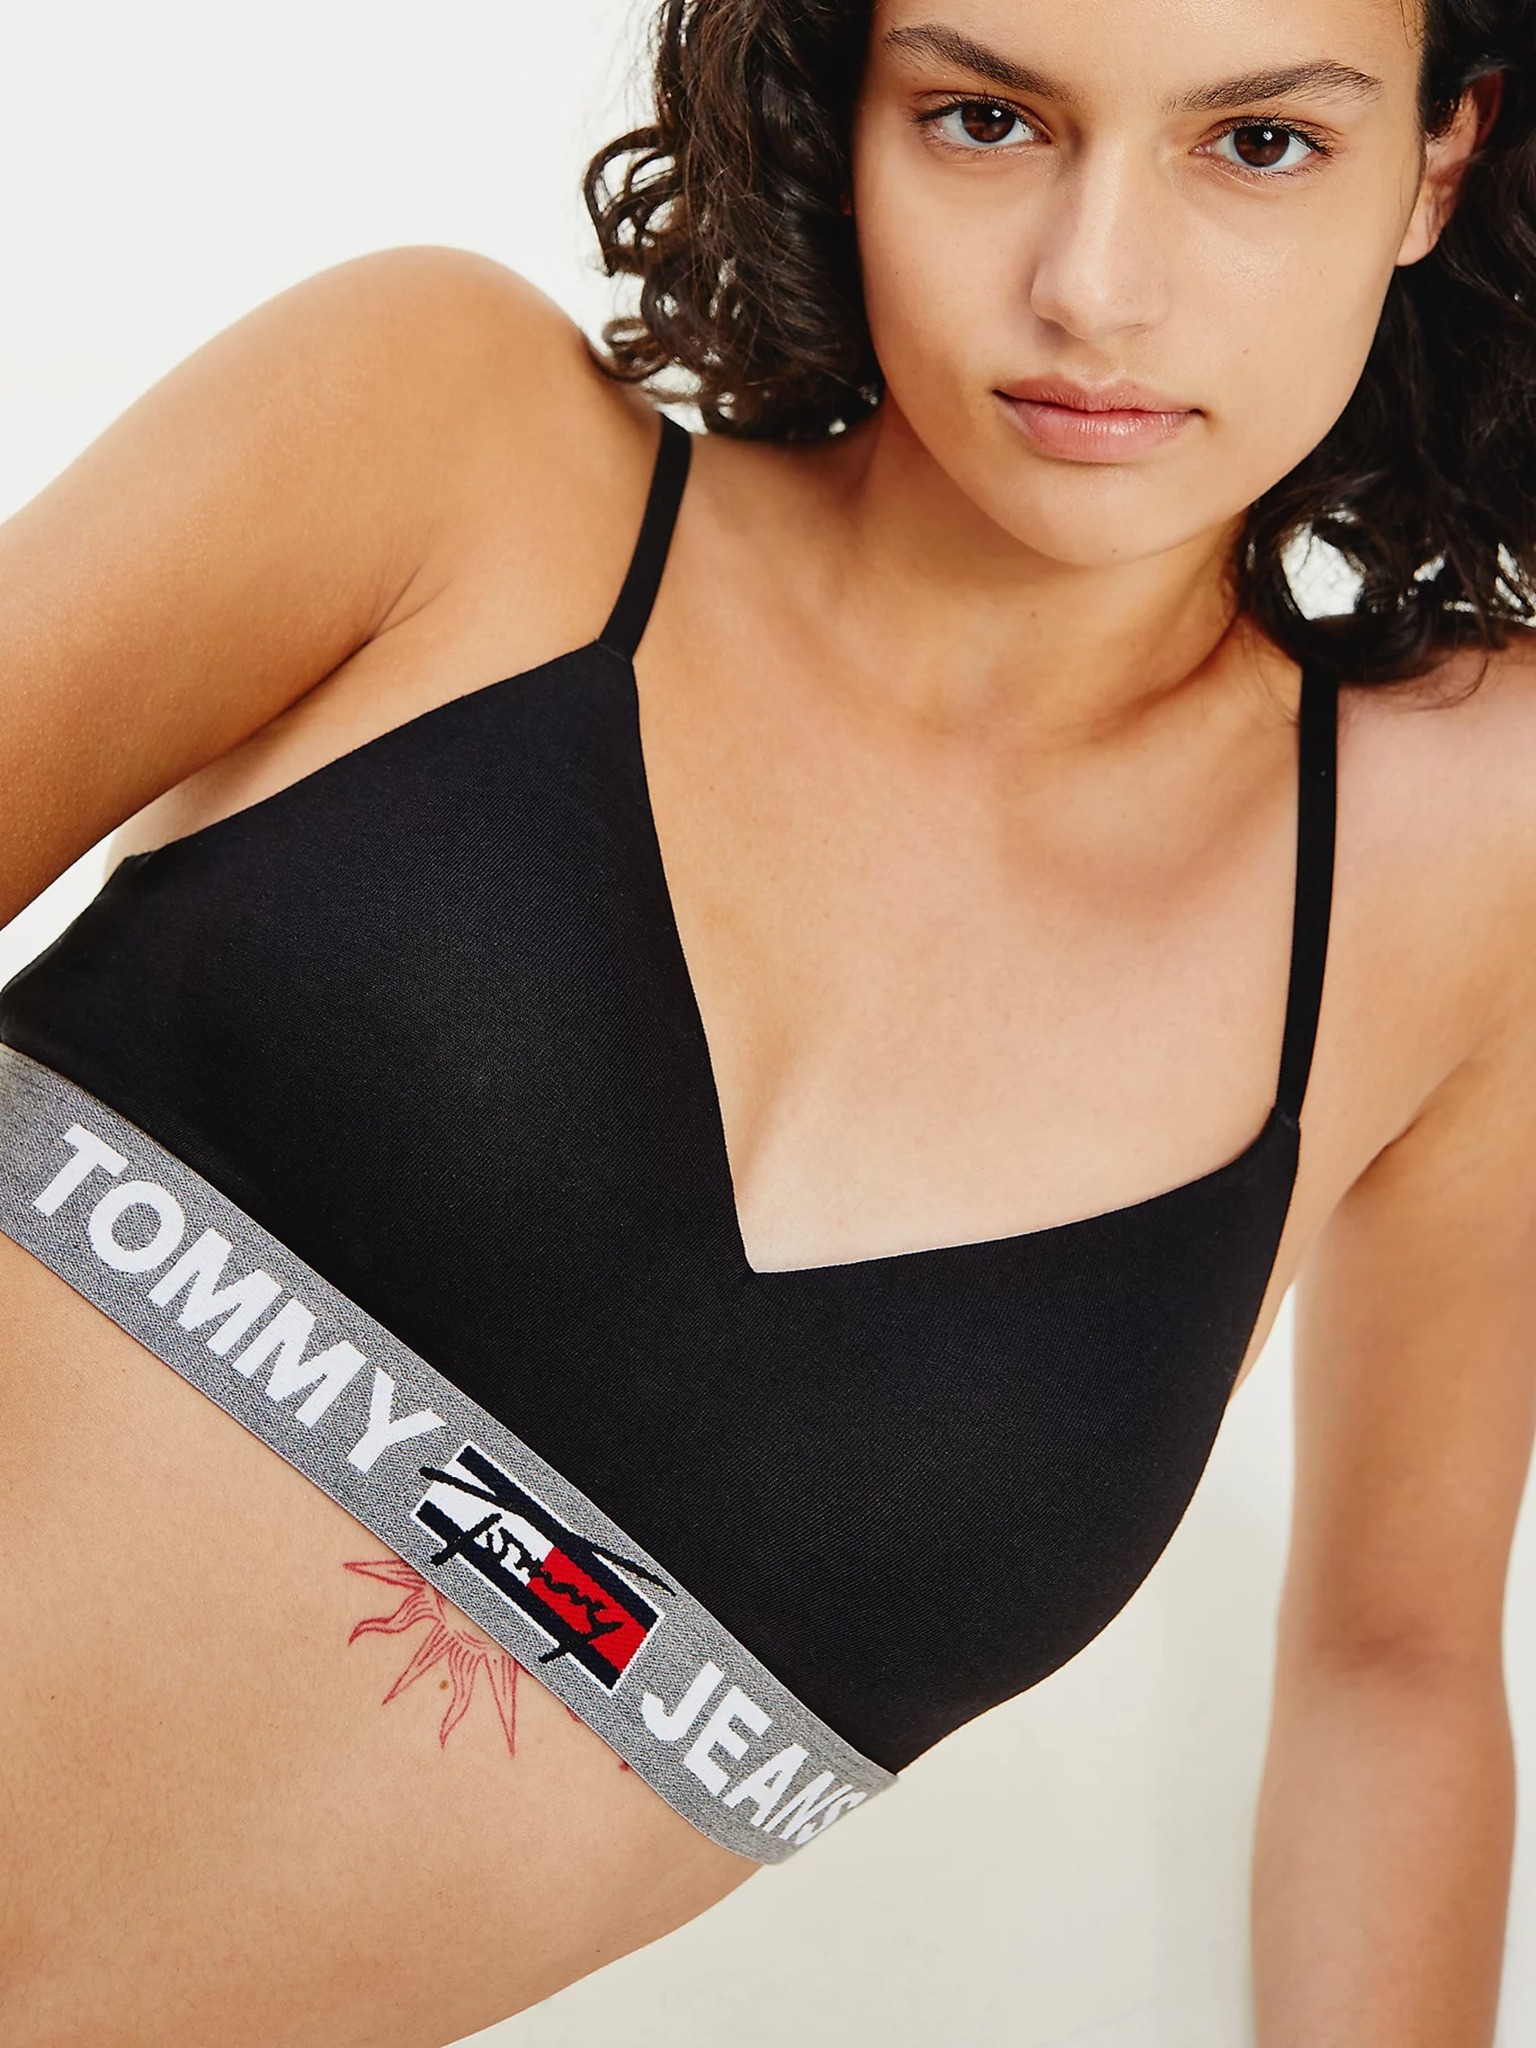 Tommy Hilfiger Underwear - Unlined Bralette Bra